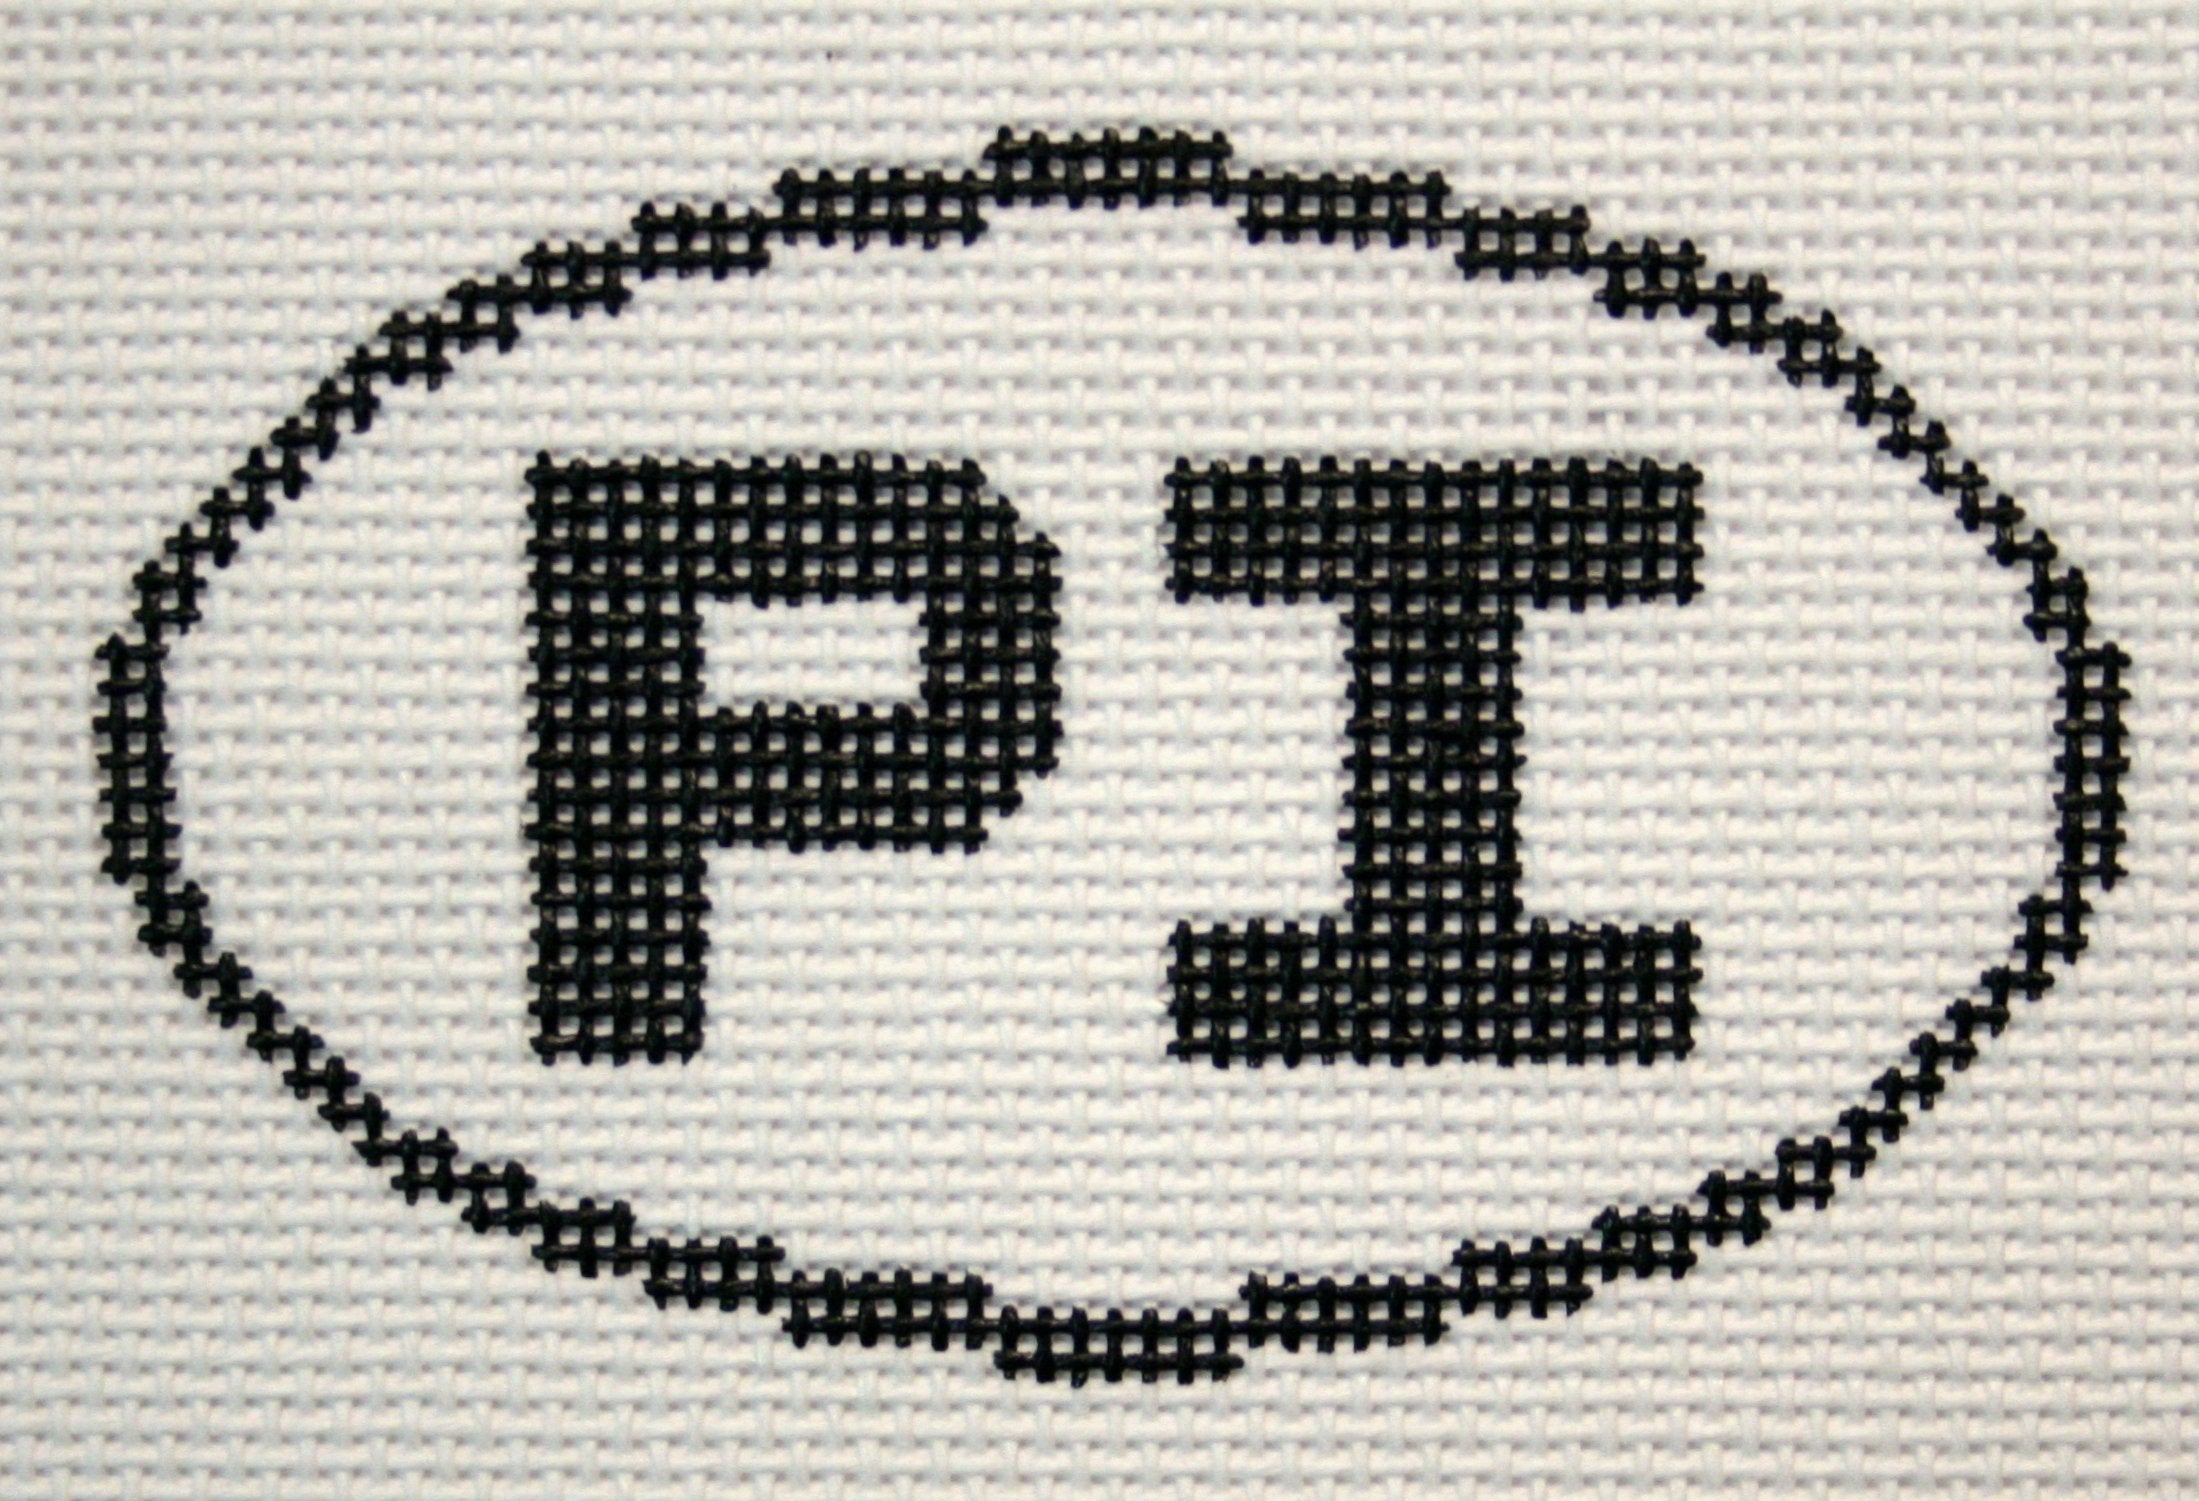 PI (Pawleys Island, SC) Oval Ornament